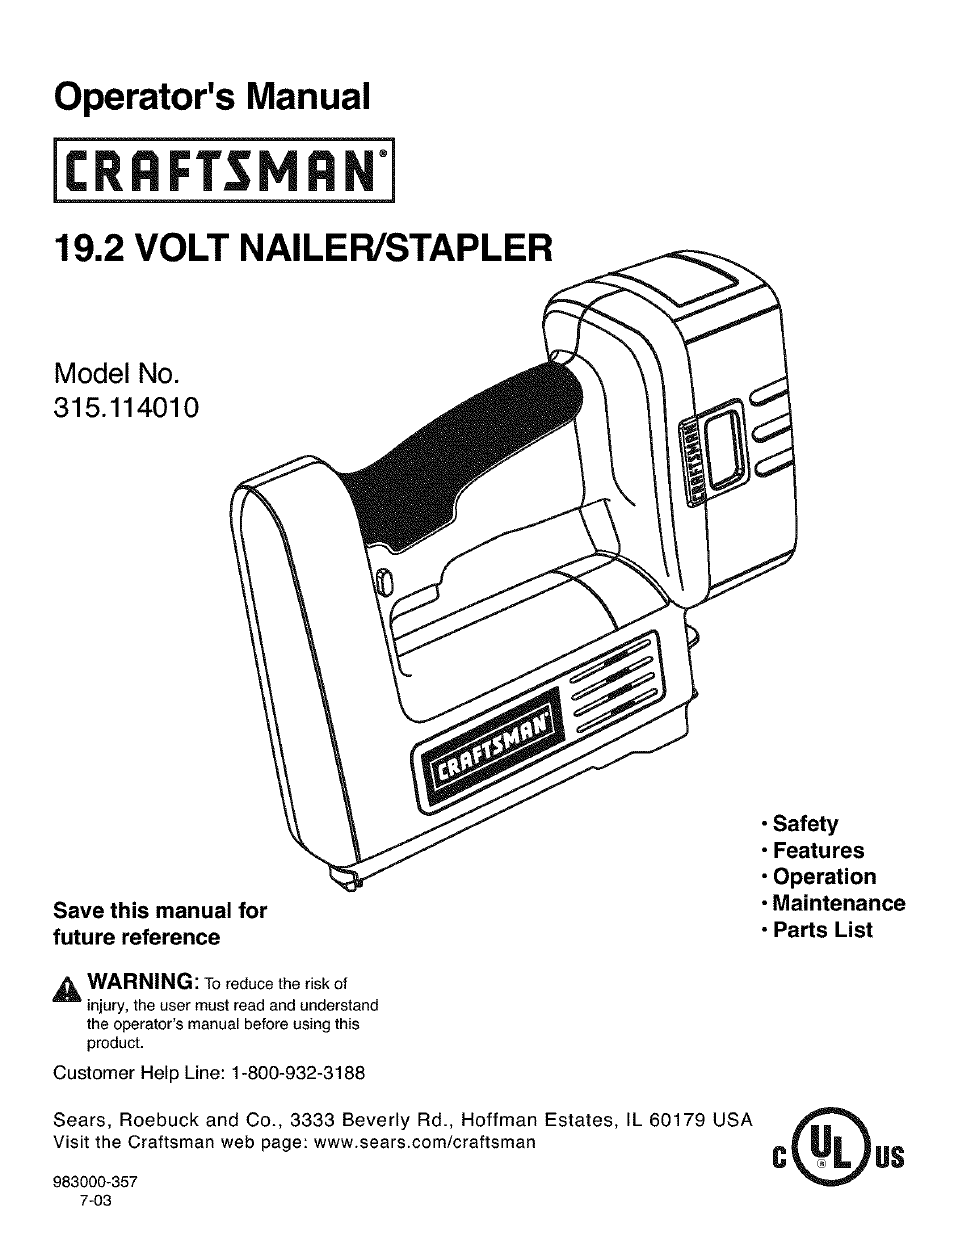 Craftsman 315.114010 User Manual | 16 pages